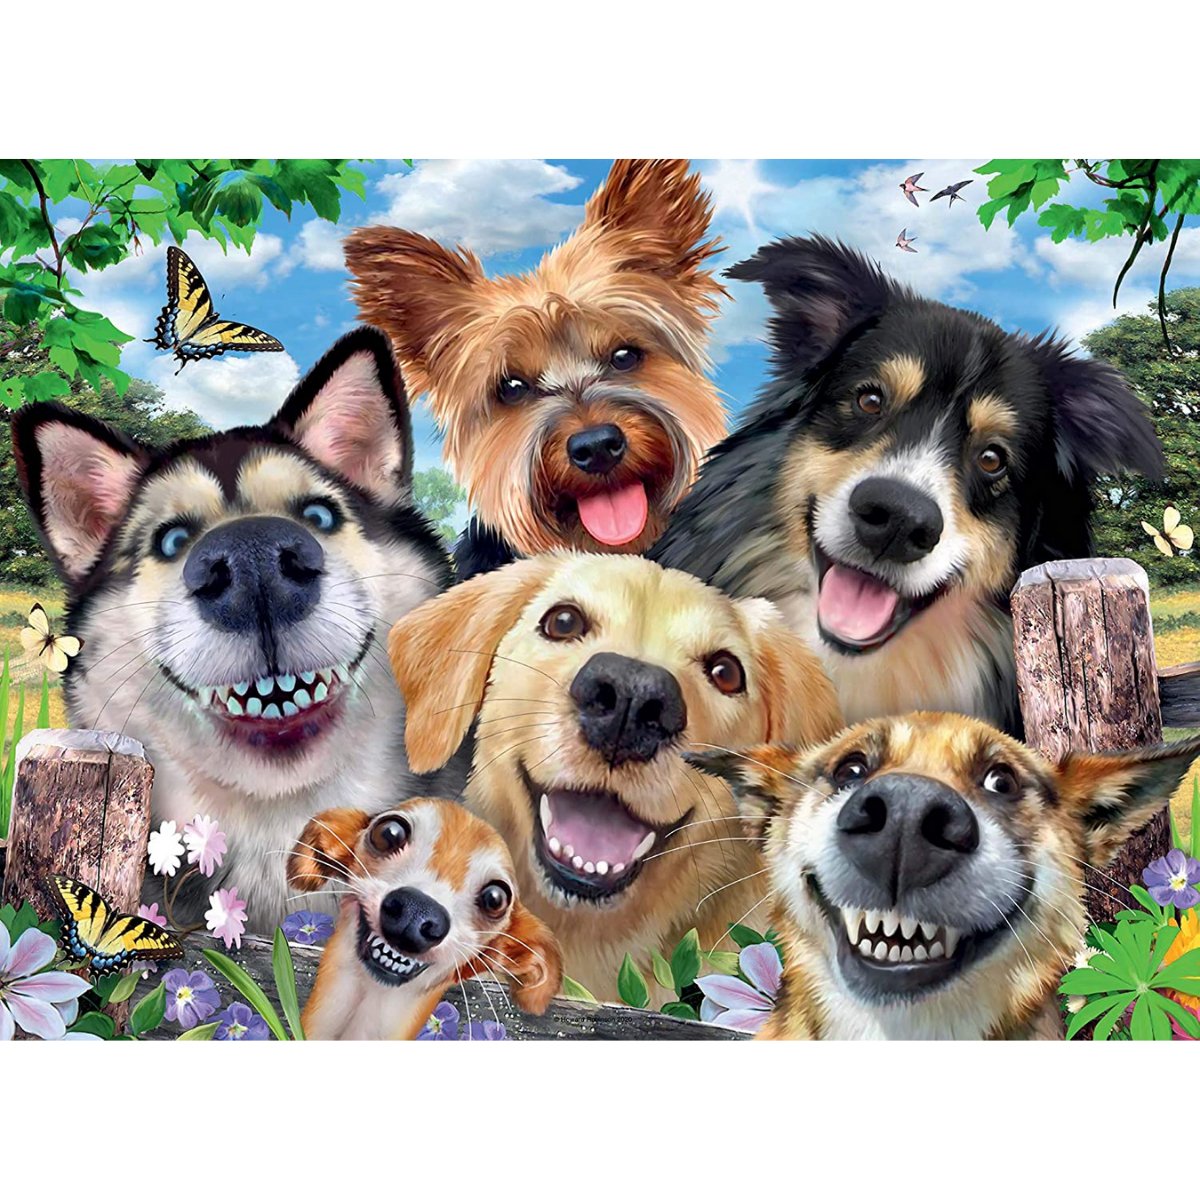 Ravensburger Selfies Dogs' Delight Jigsaw Puzzle - 500 Pieces - Phillips Hobbies